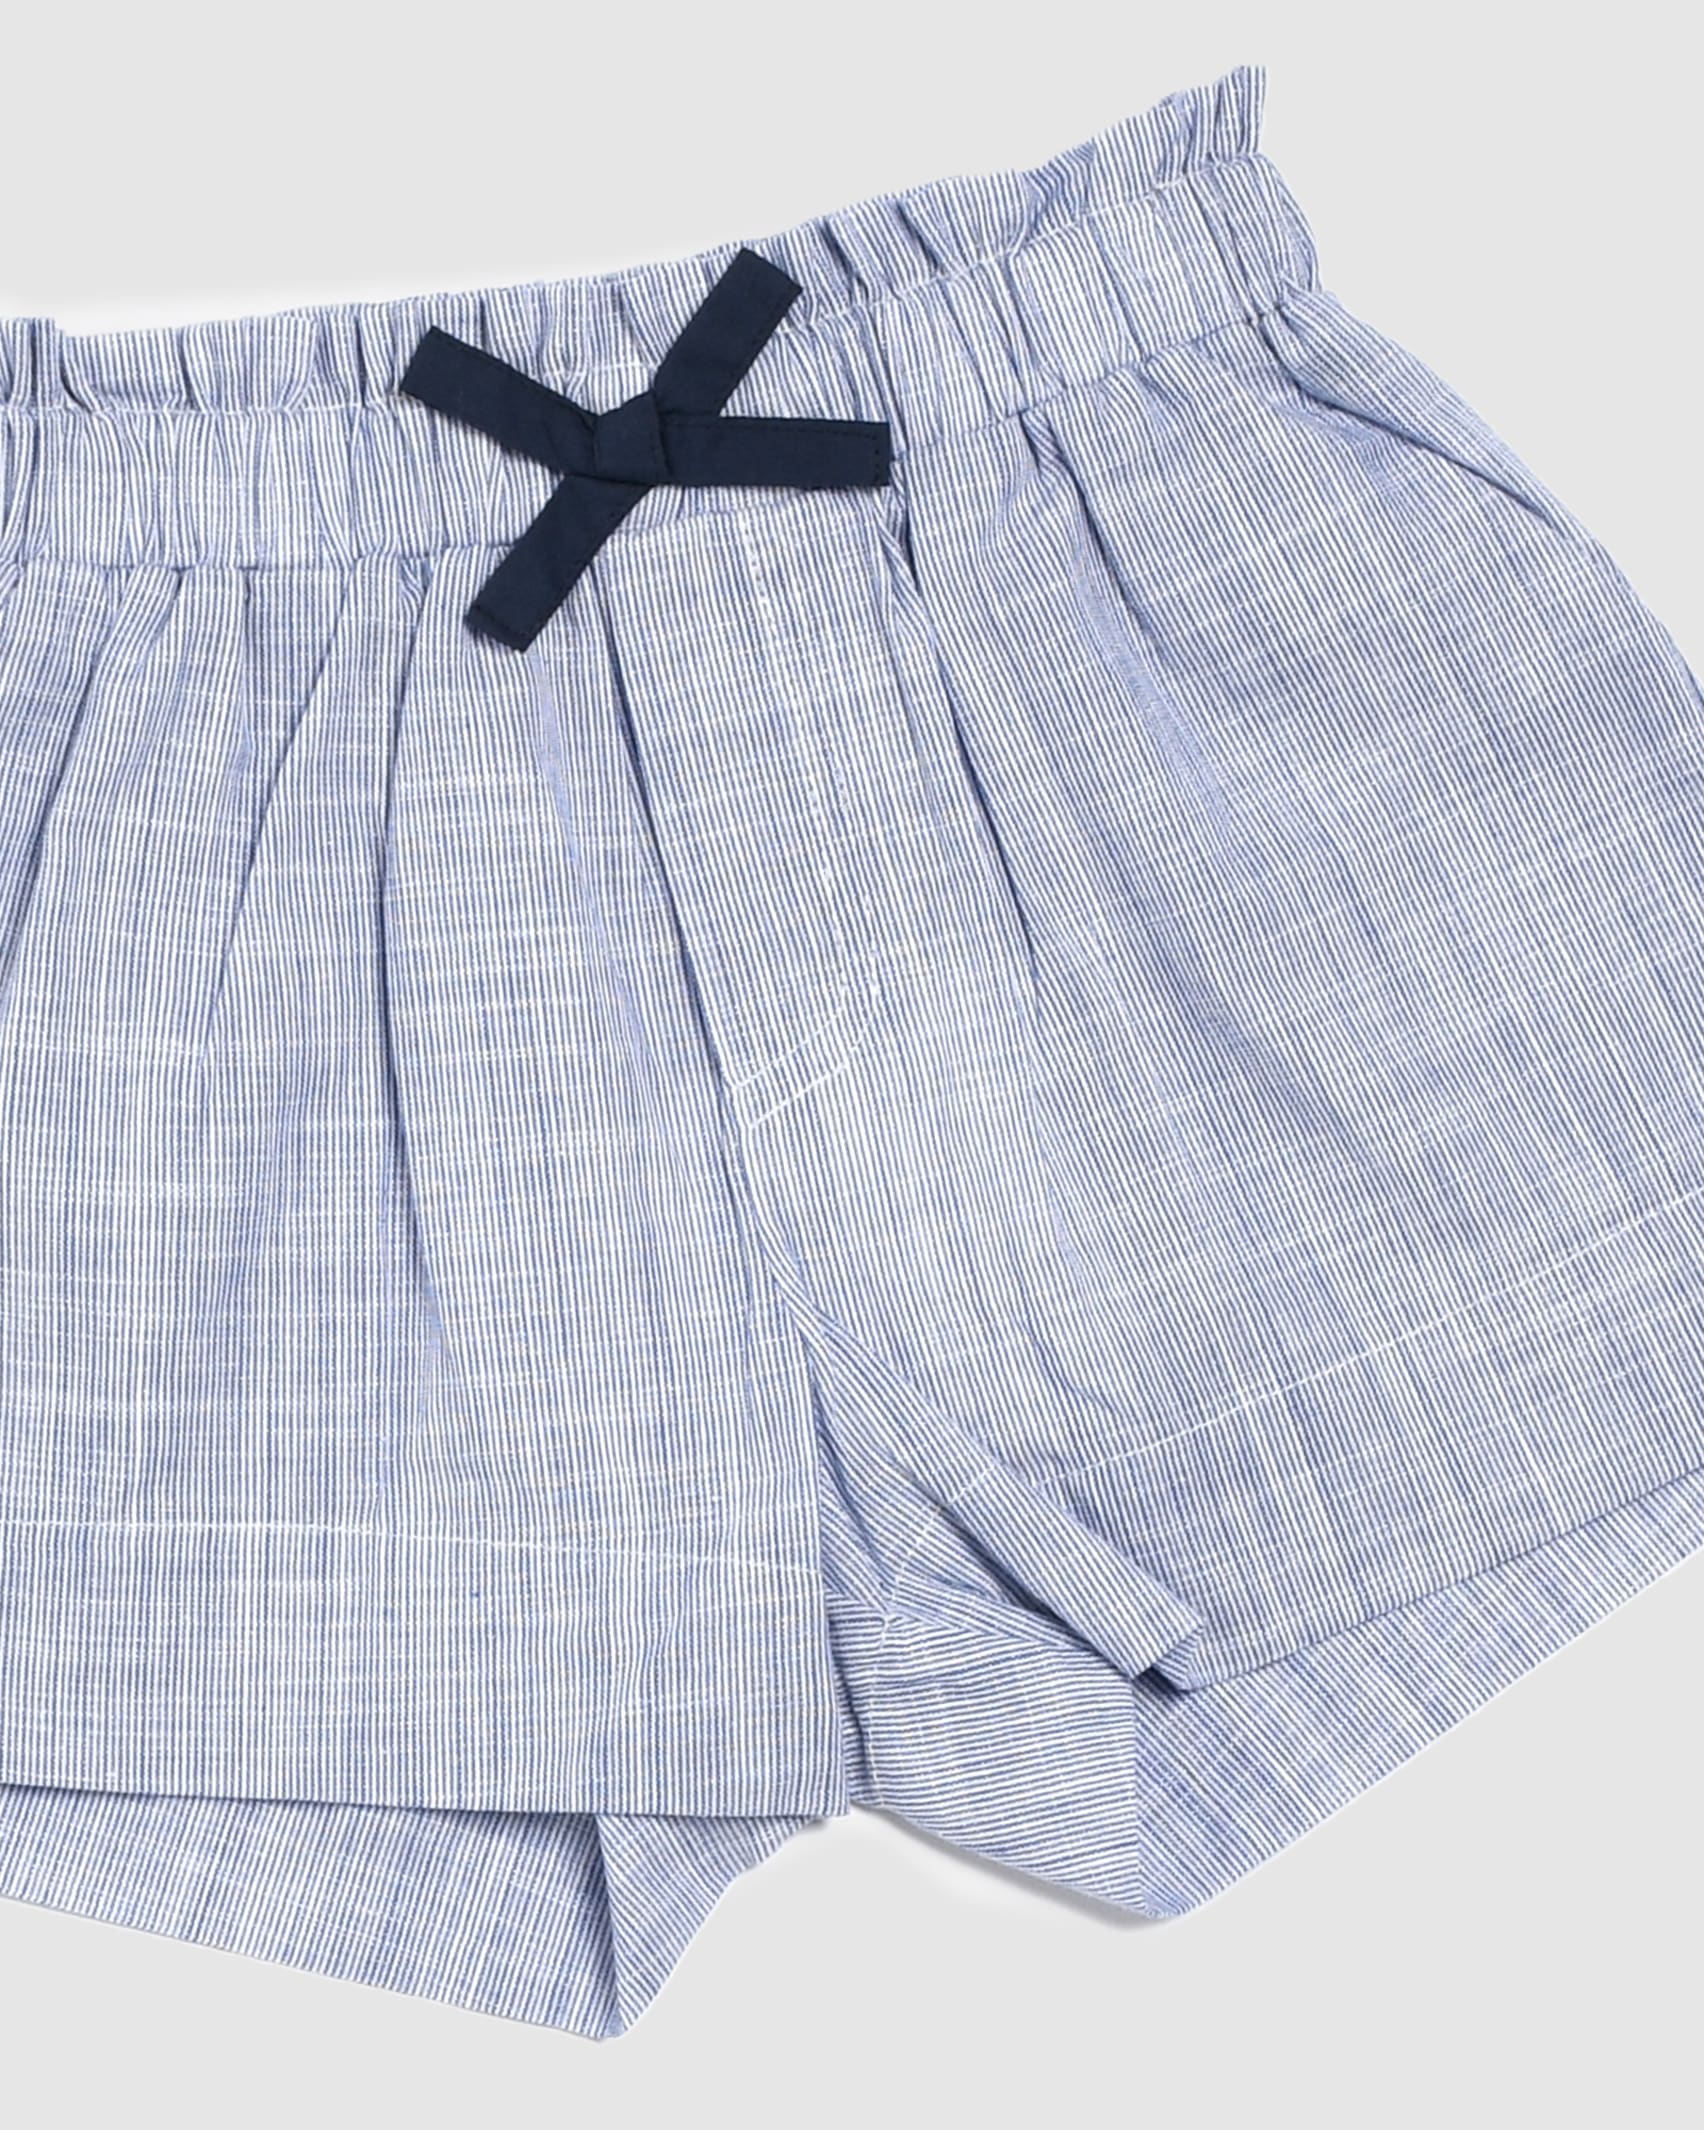 Mila Cotton Stripe Short in ANTIQUE BLUE